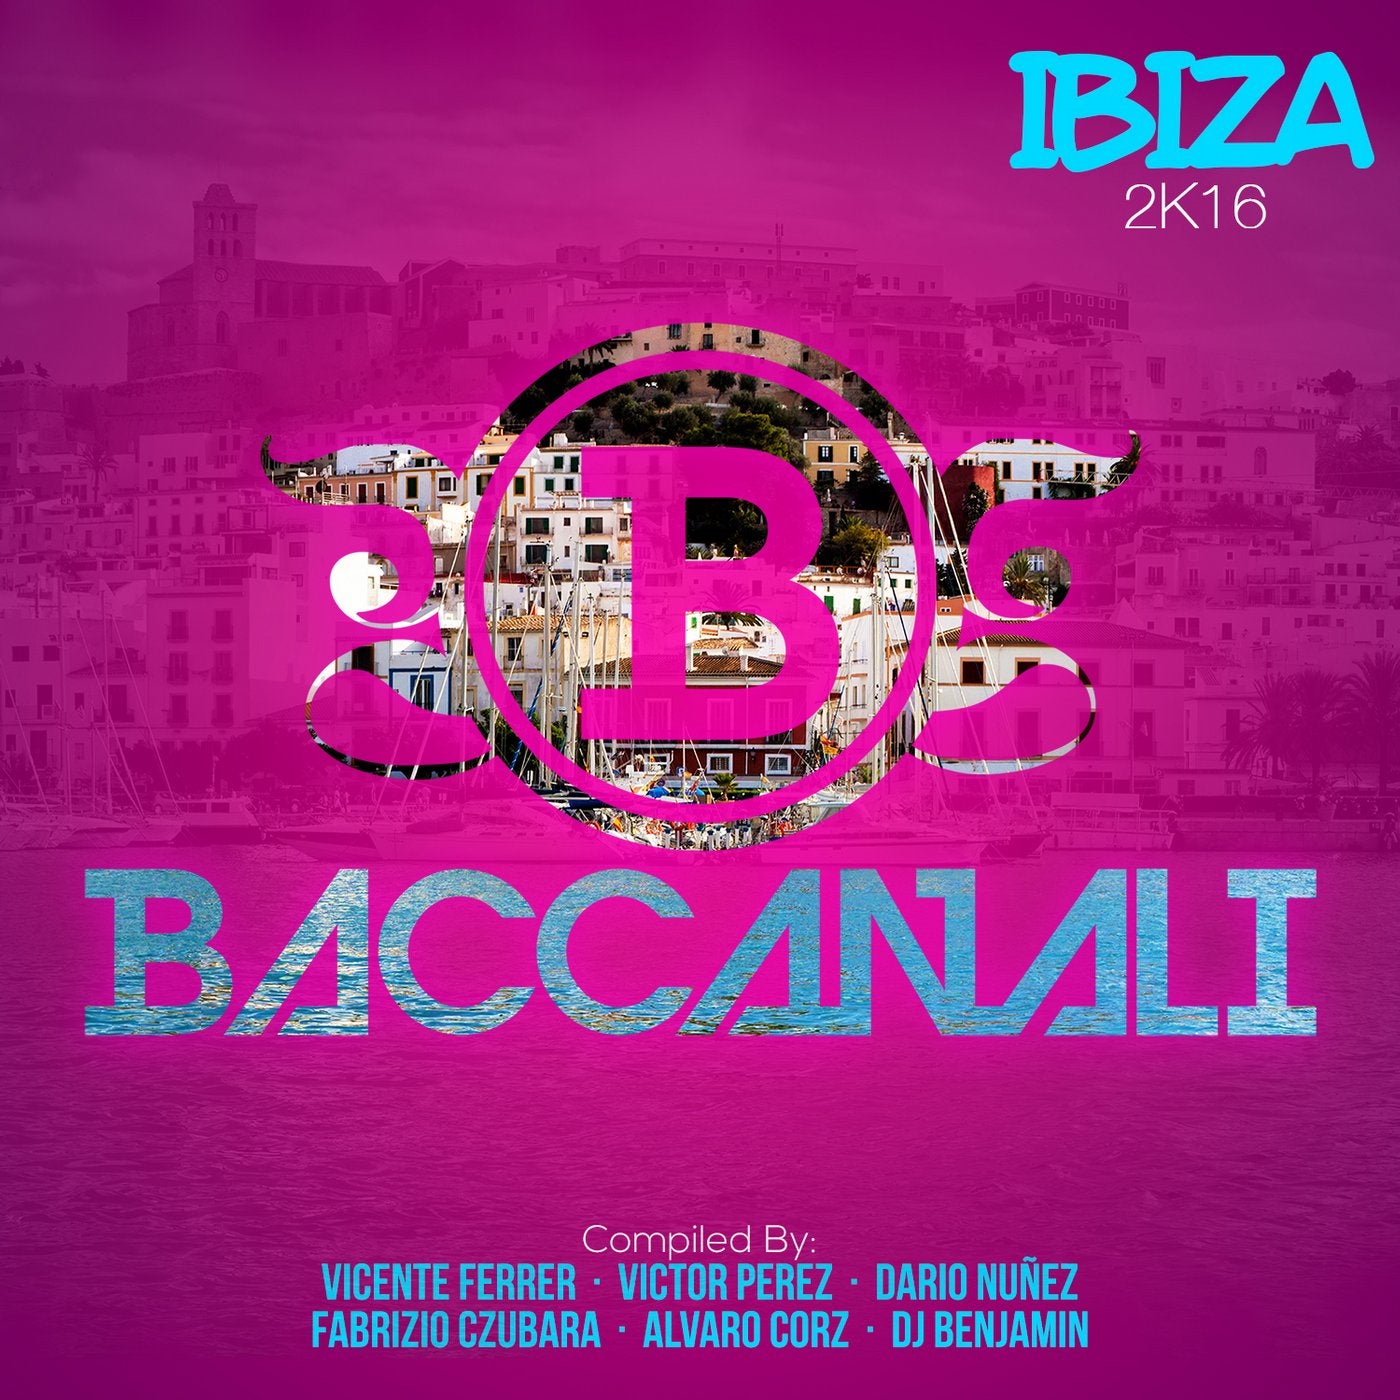 Baccanali Ibiza 2K16